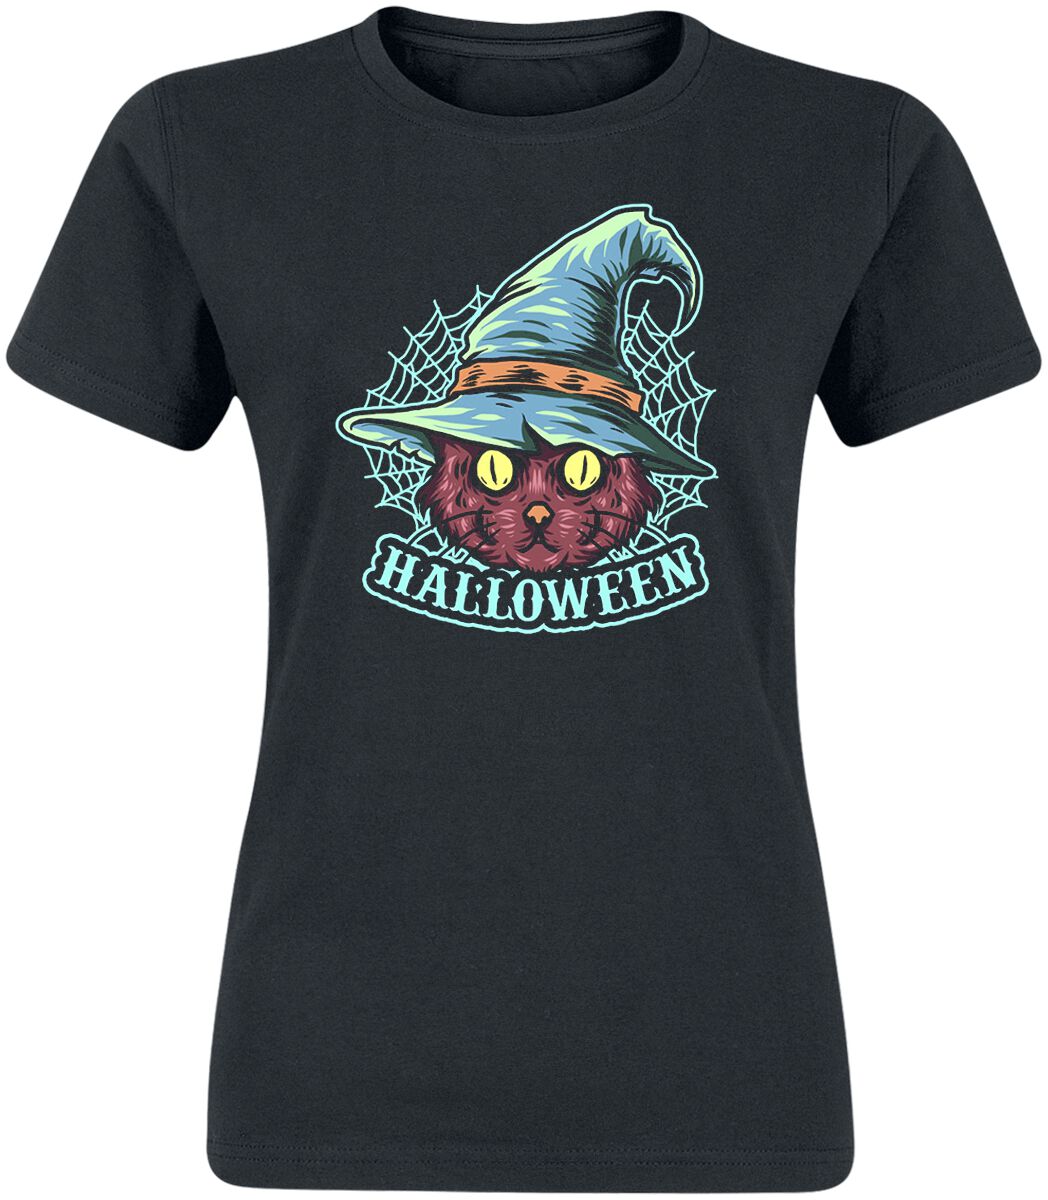 Halloween Witch Cat T-Shirt black